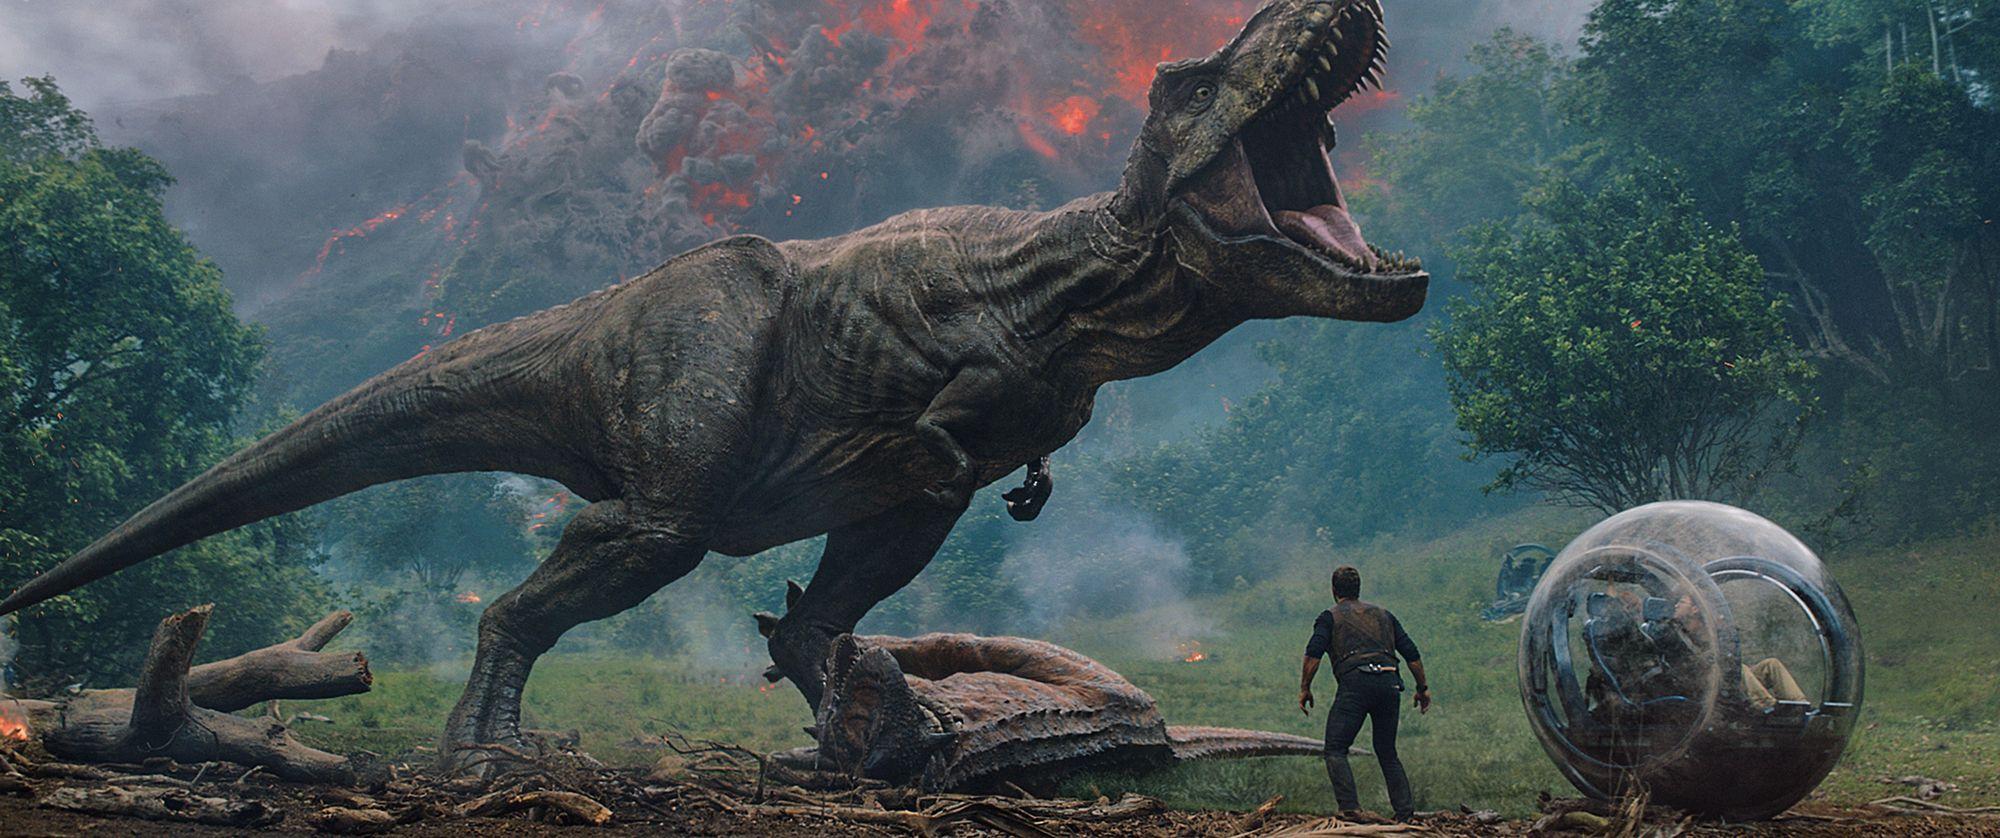 Jurassic World 2 Poster Shuts Down the Park; New Tomorrow